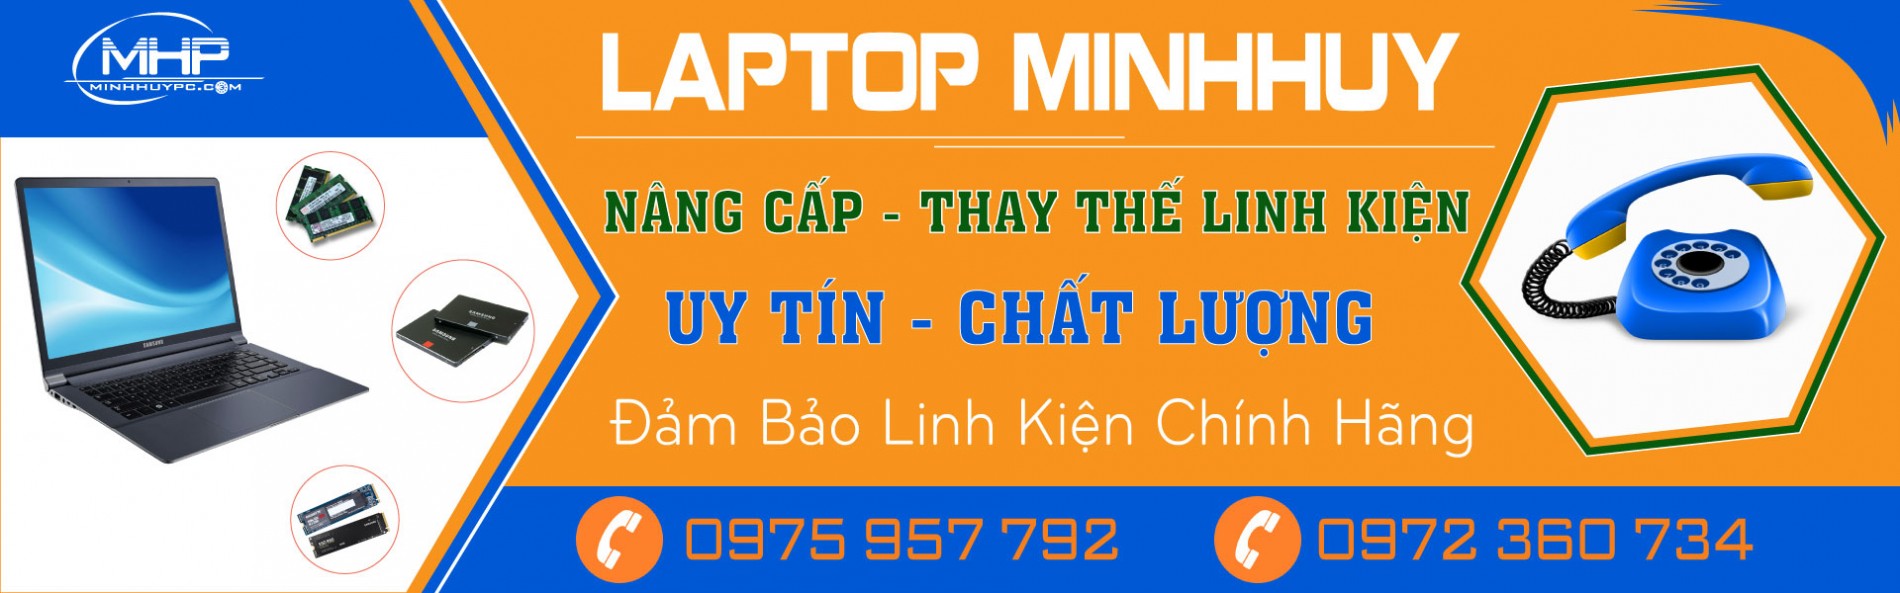 banner-nang-cap-laptop-cu